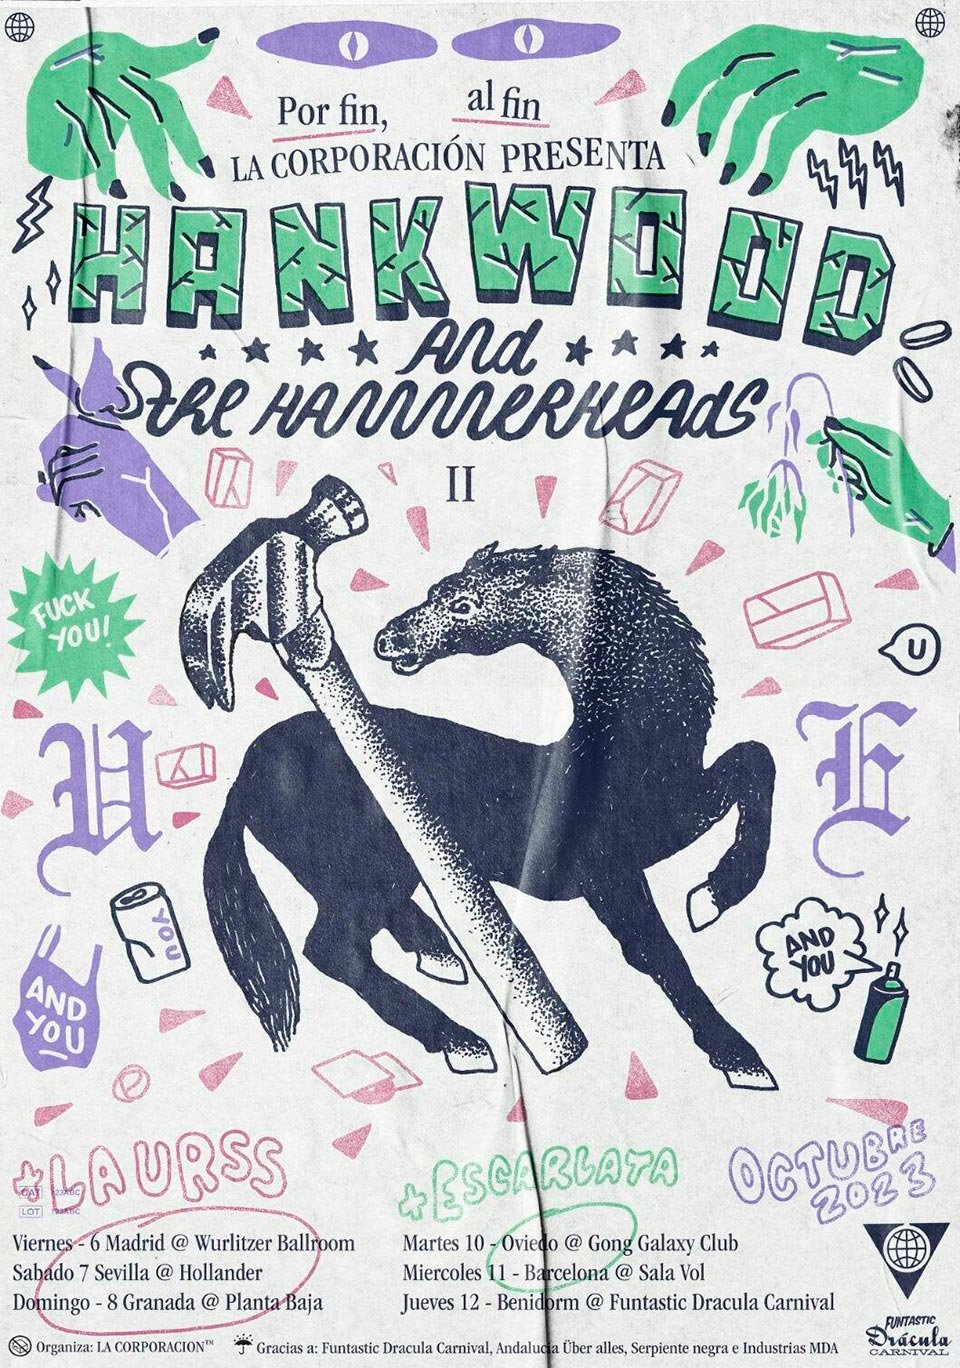 Hank Wood & The Hammerheads